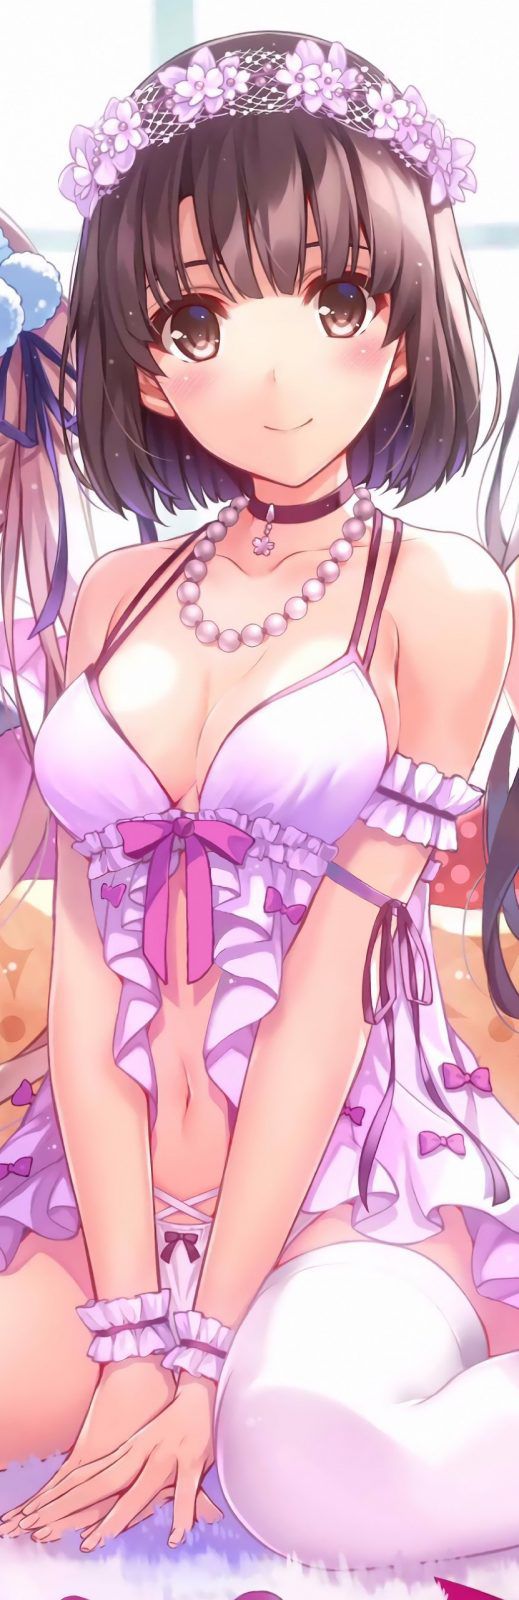 【Erotic Anime Summary】 How to Raise Her Ugly Kano Erotic Image of Megumi Kato【Secondary Erotic】 9